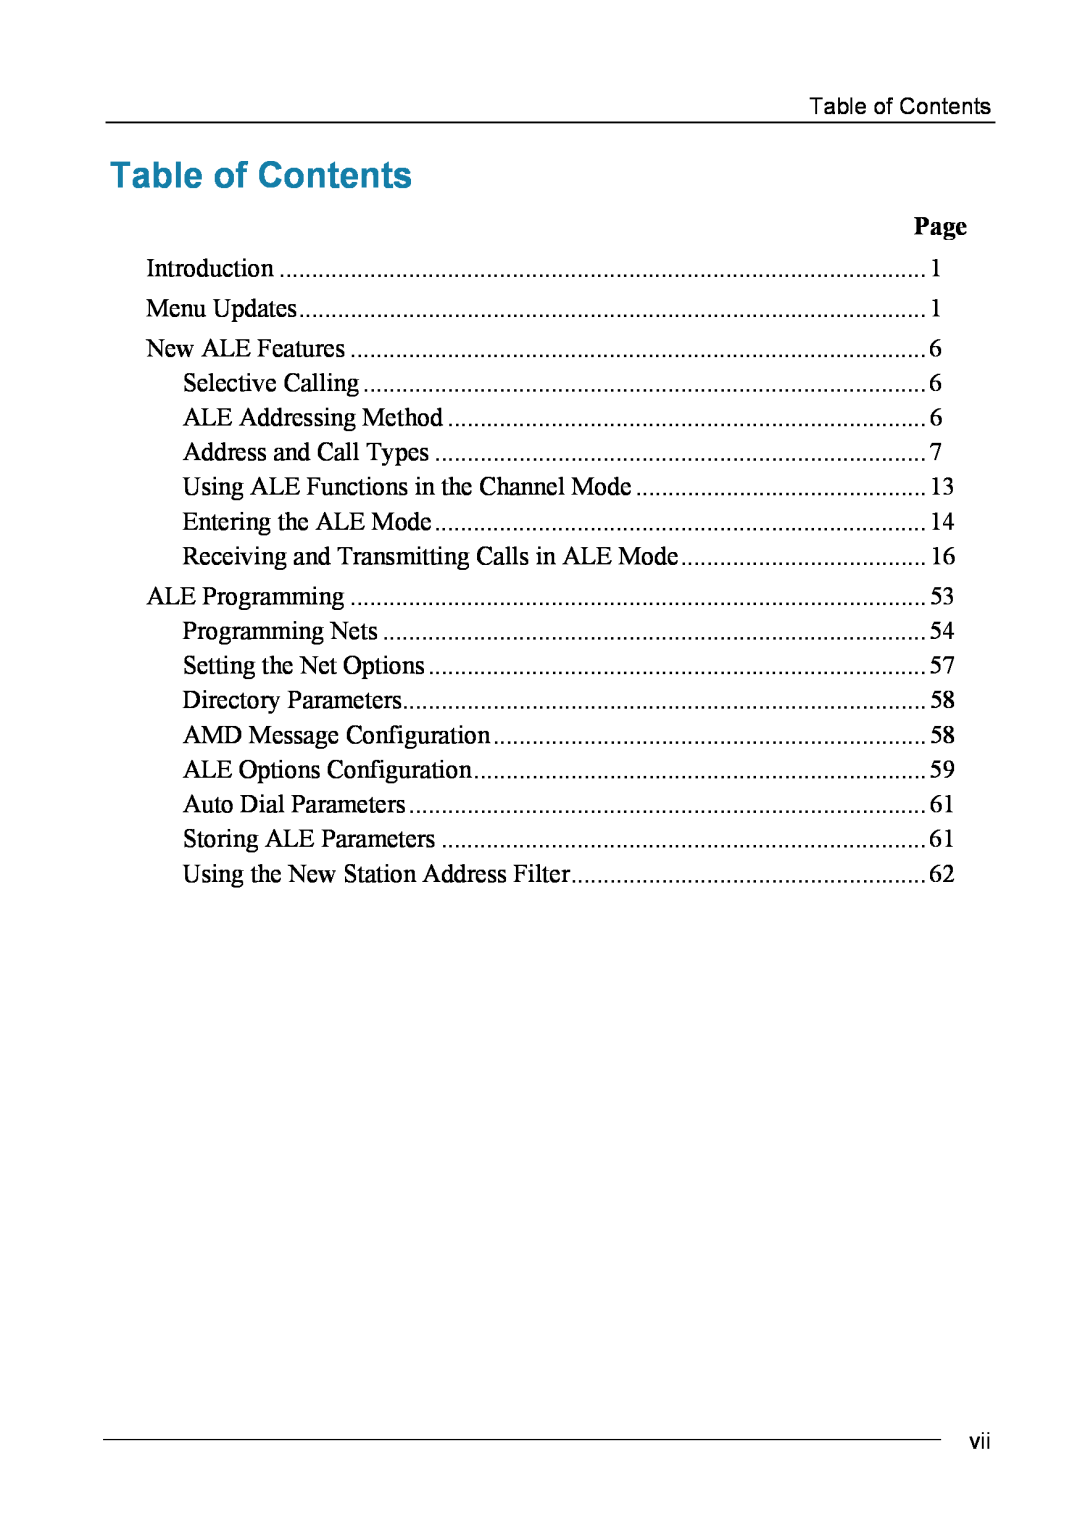 Motorola MICOM-2ES/2RS/2TS ALE manual Table of Contents, Page 